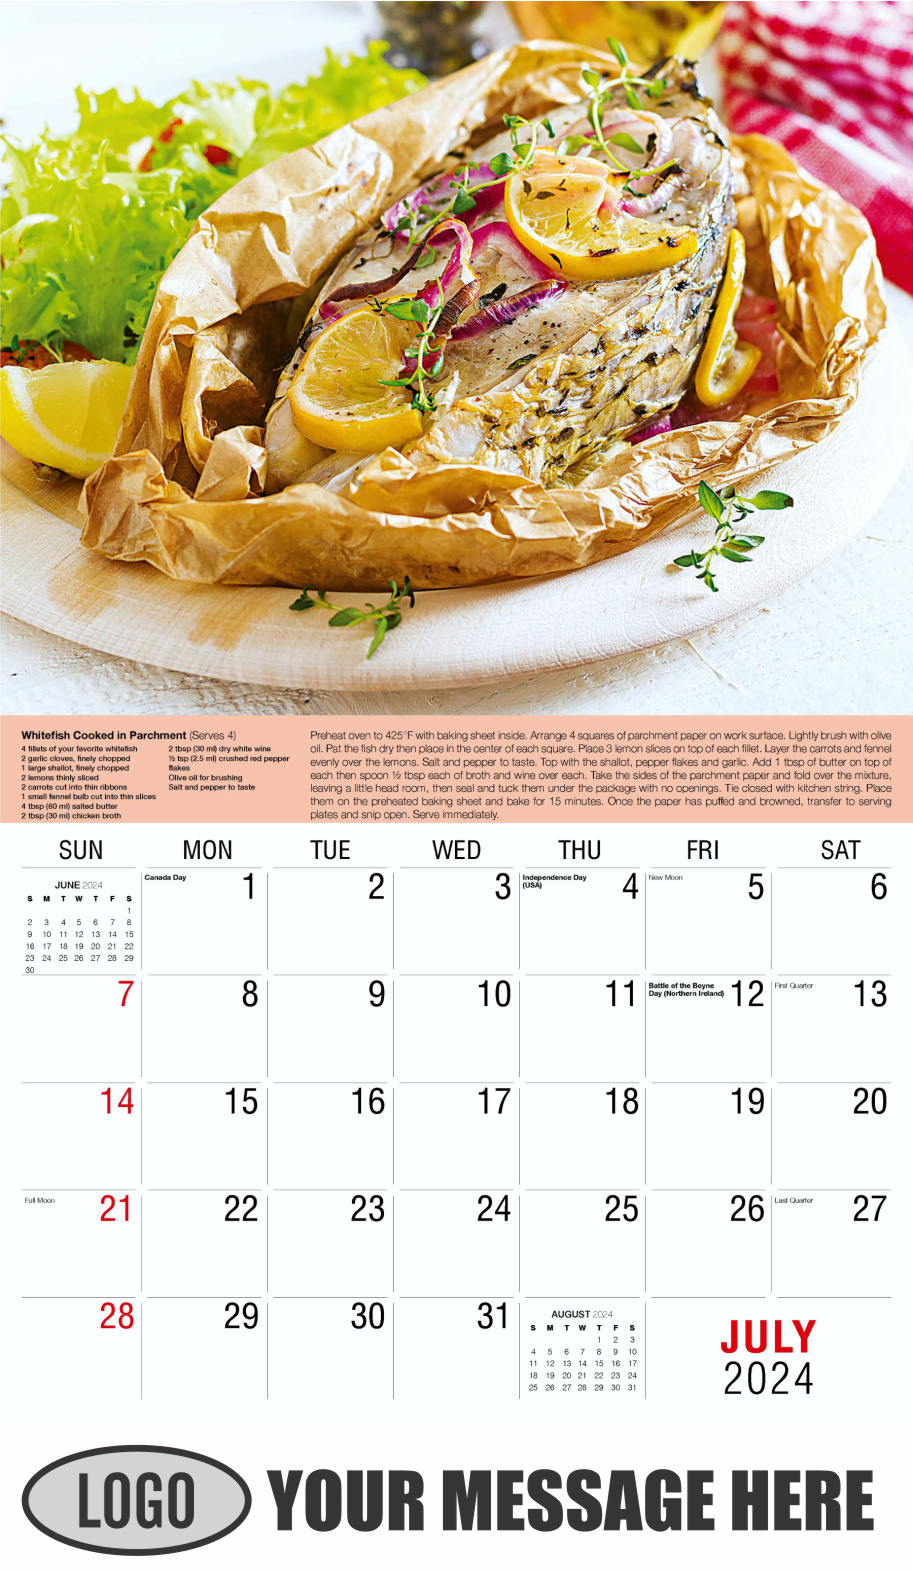 Recipes 2024 Business Promotional Calendar - July